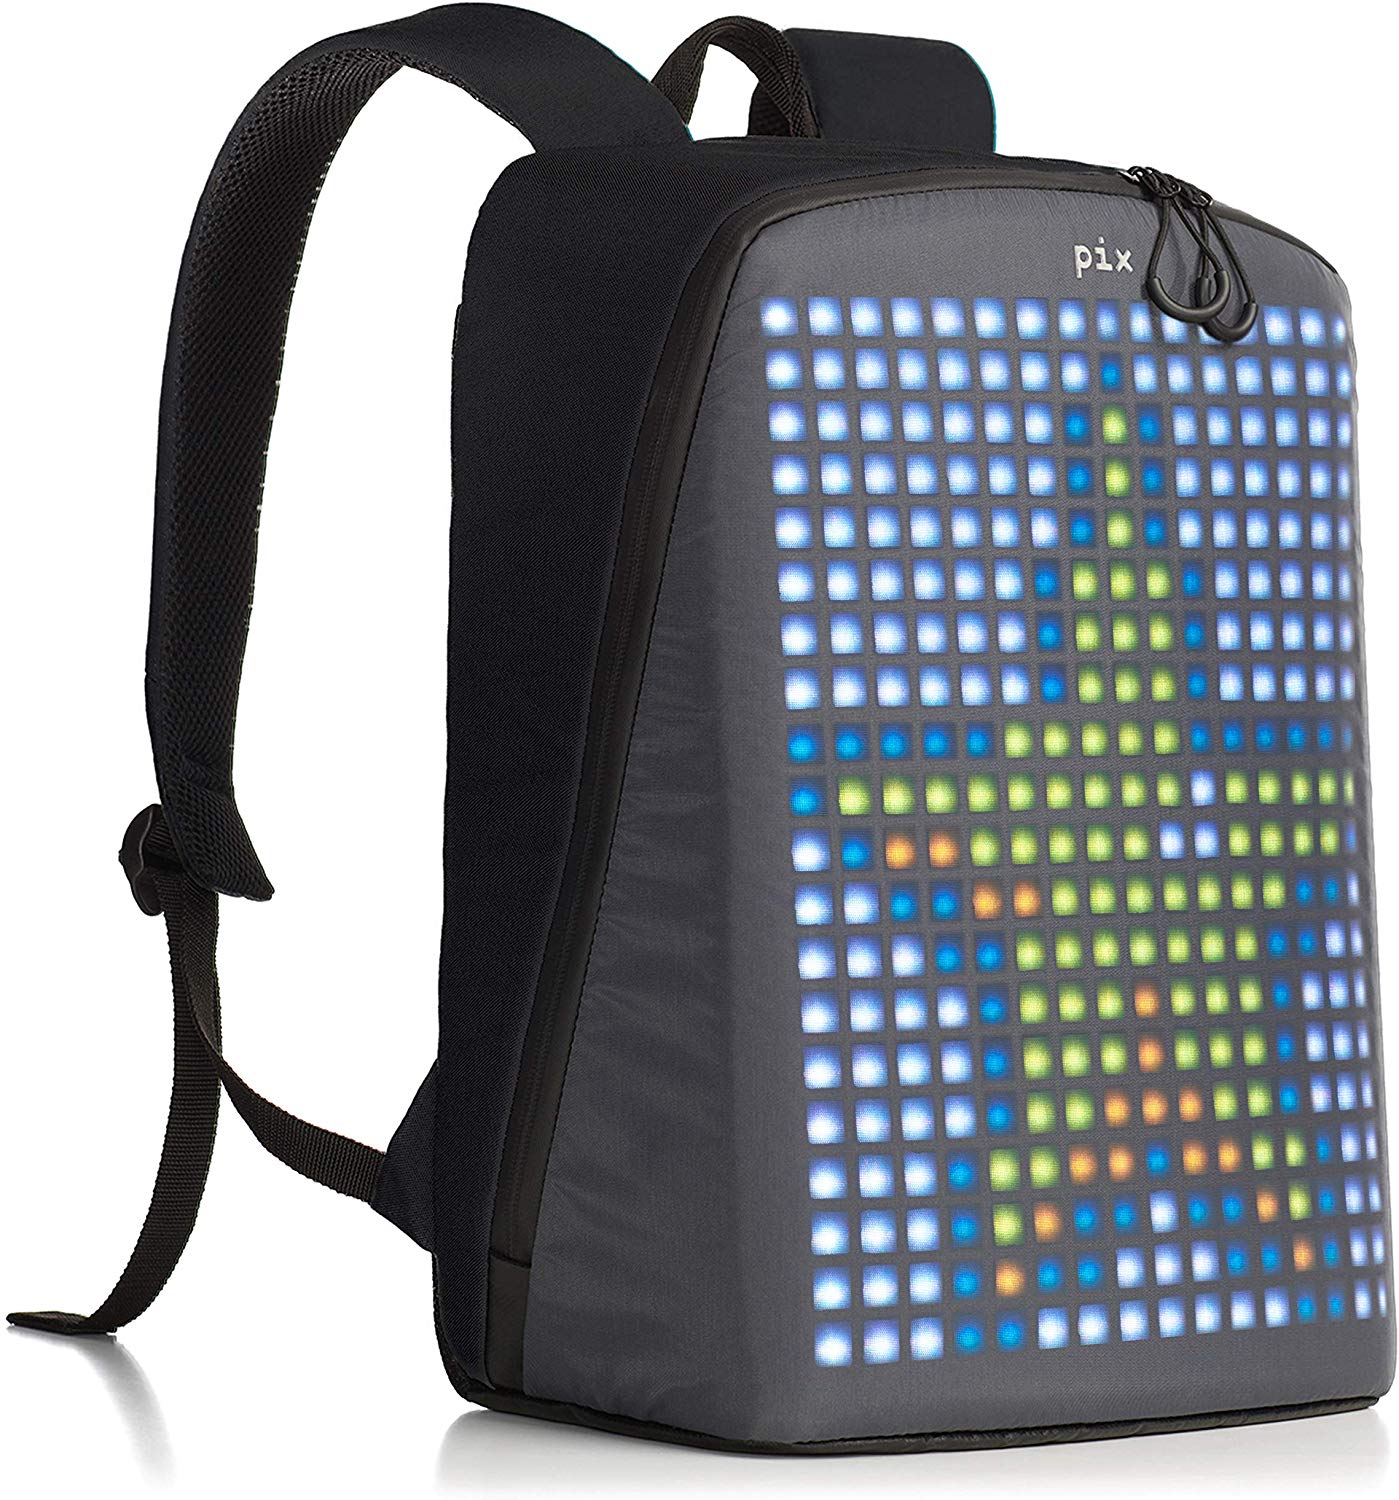 Cool Tech Gifts 2020: Pix Digital Backpack 2020